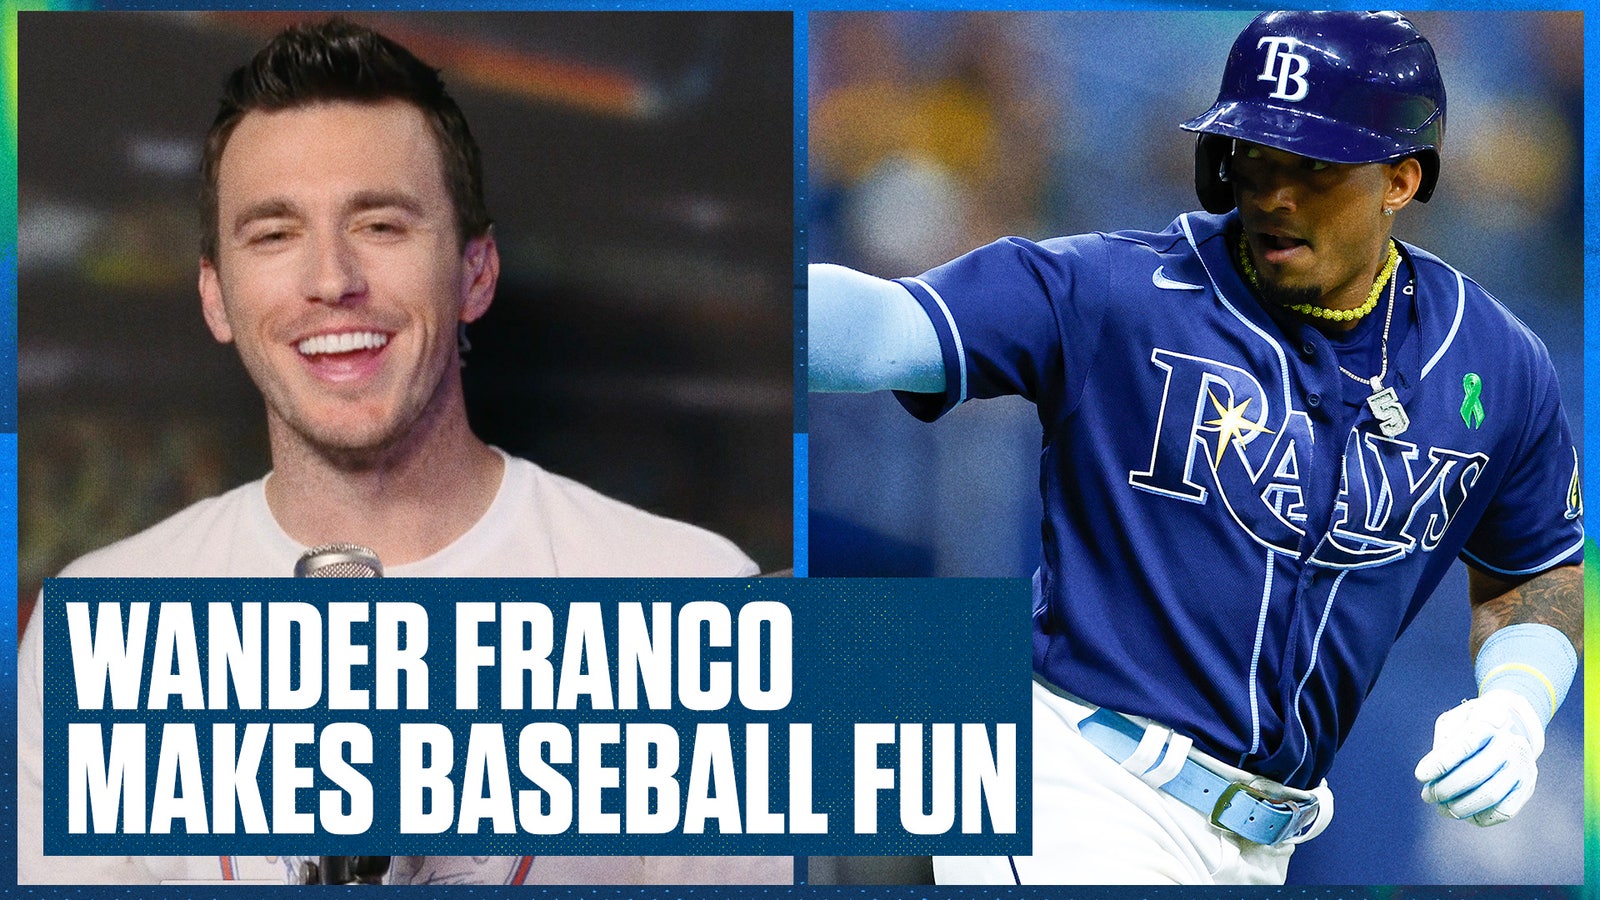 Tampa Bay Rays superstar Wander Franco makes baseball more fun with dazzling play 